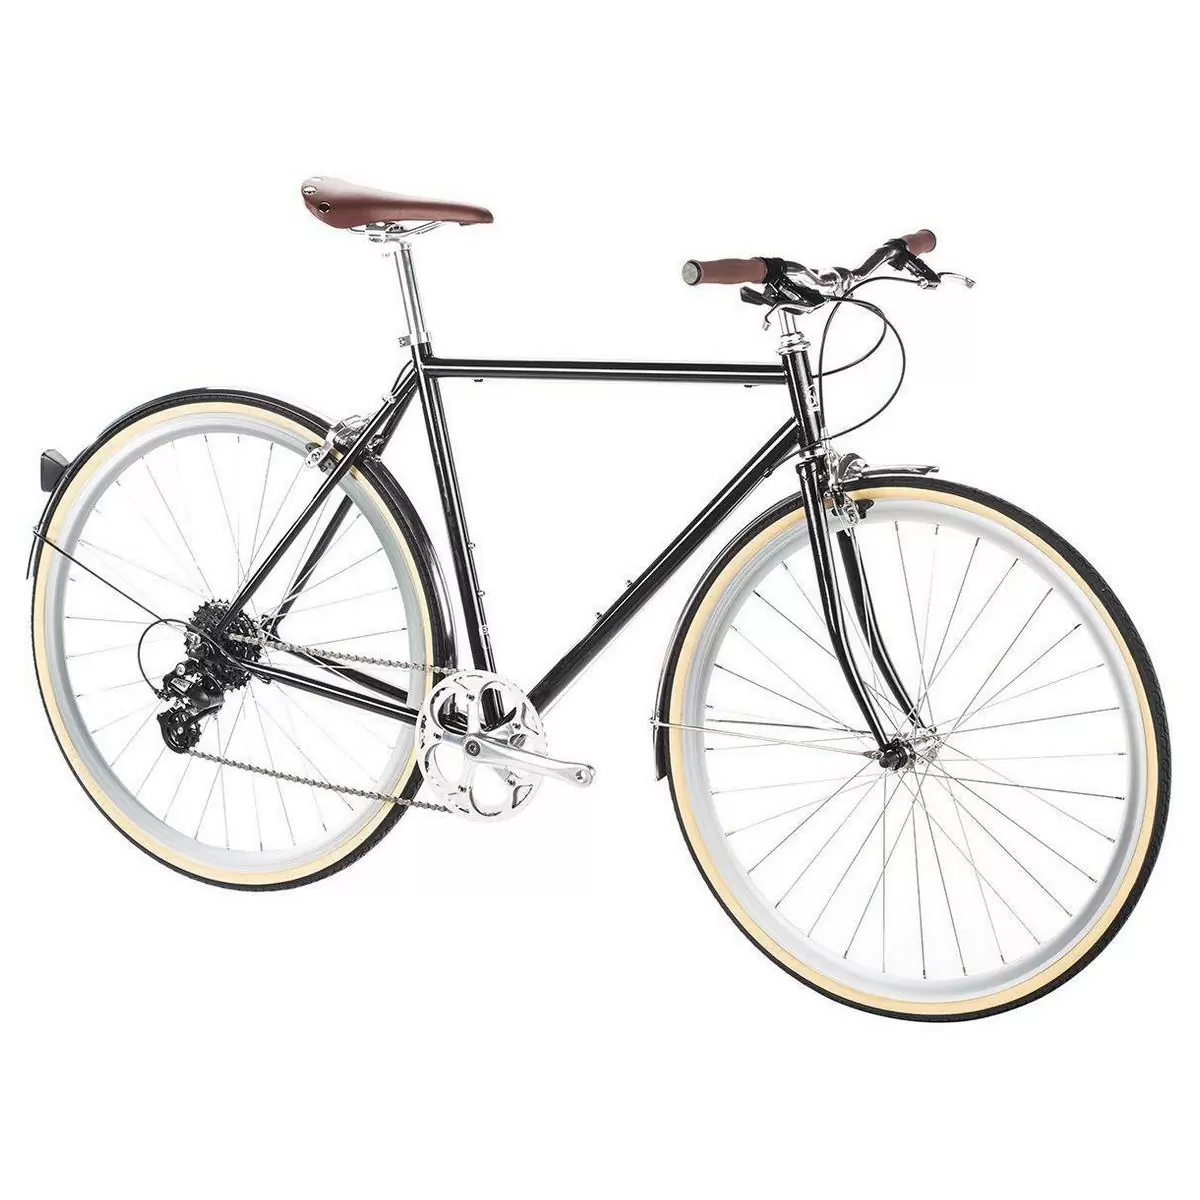 Bicicleta urbana ODYSSEY 8spd Delano preta grande 58cm #1